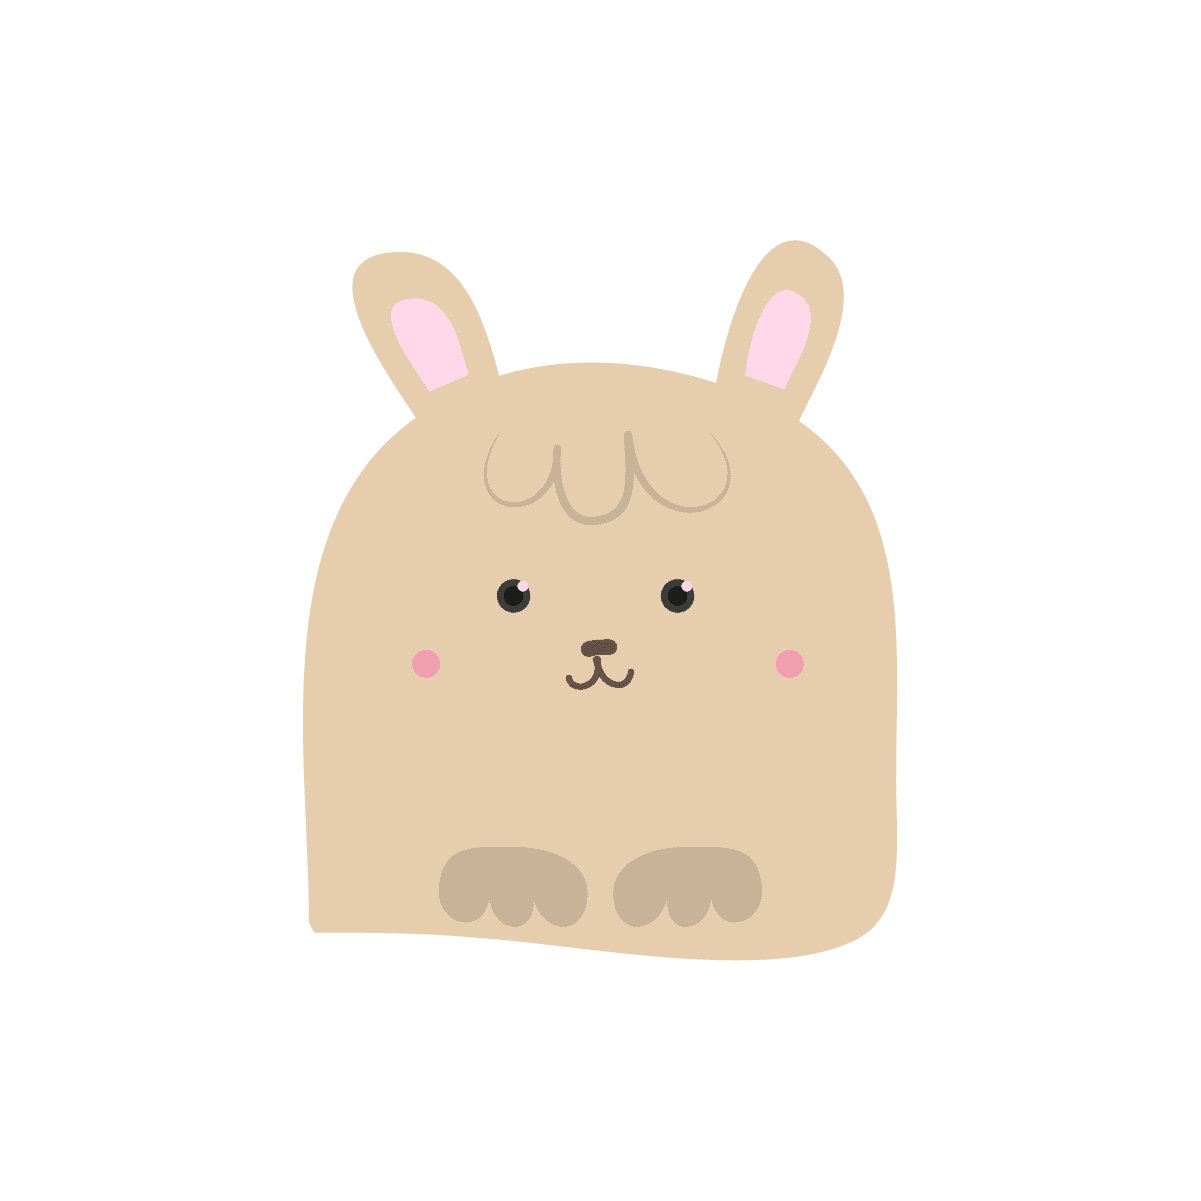 simple charming adorable pink cartoon bunny